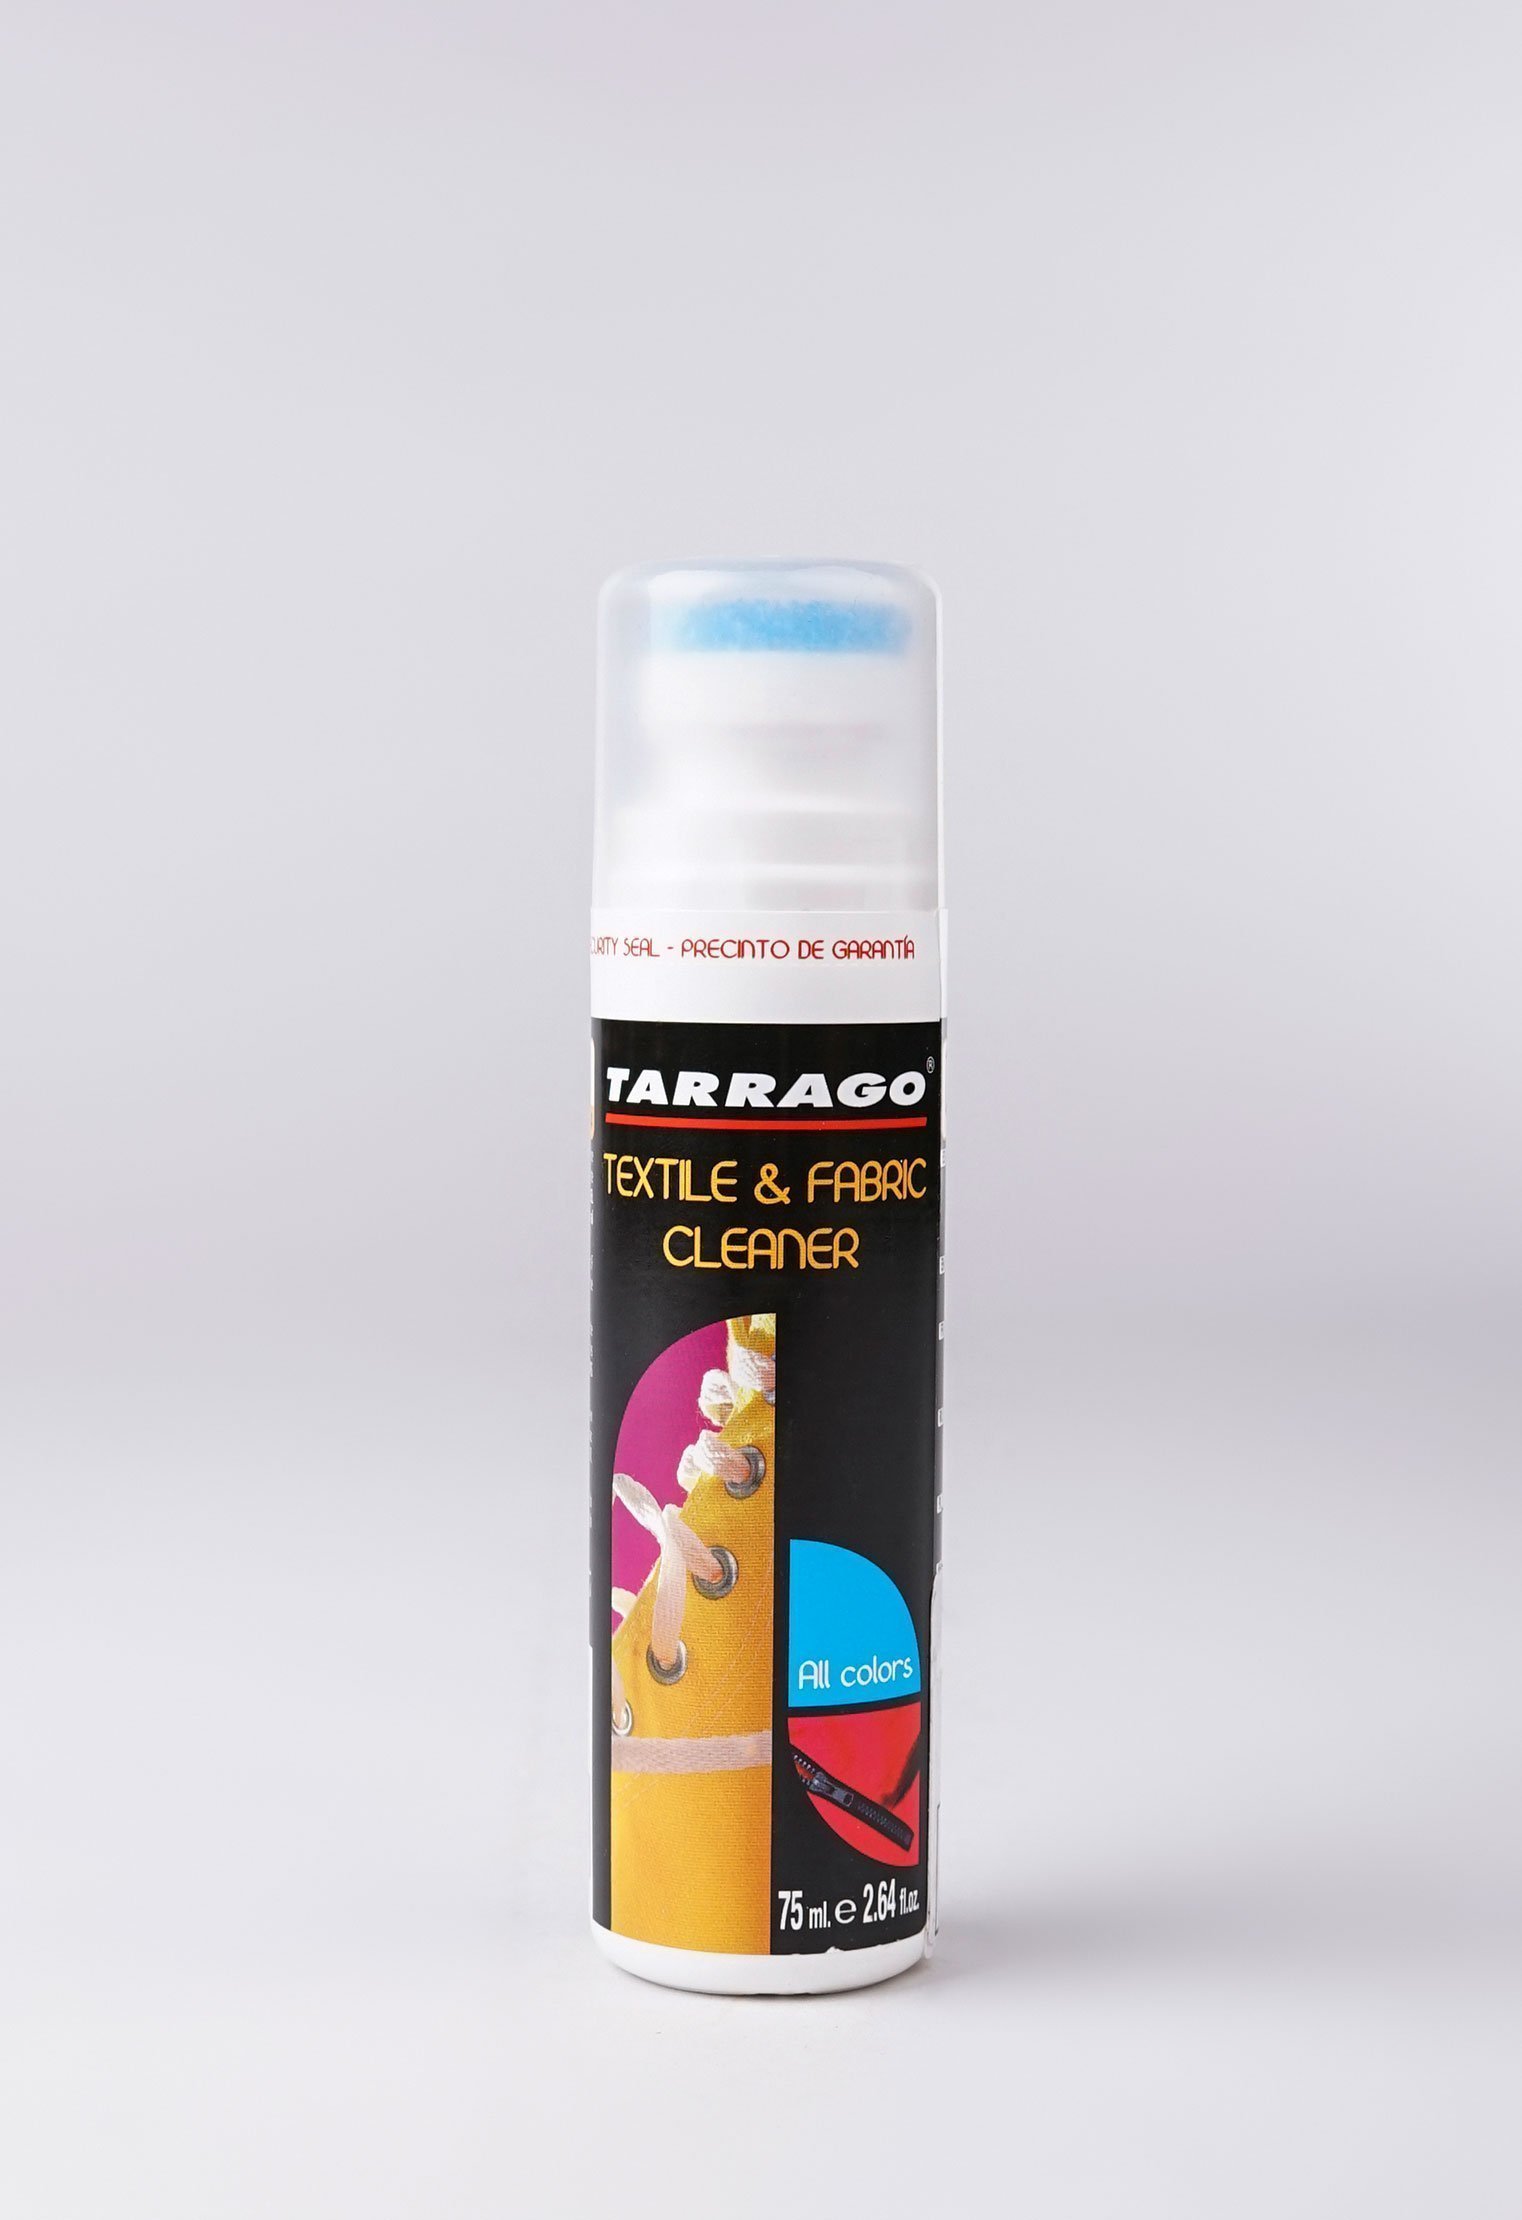 Шампуни и очистители 20-1057 TARRAGO - Очиститель для текстиля TEXTIL CLEANER, флакон, 75мл. цена и фото